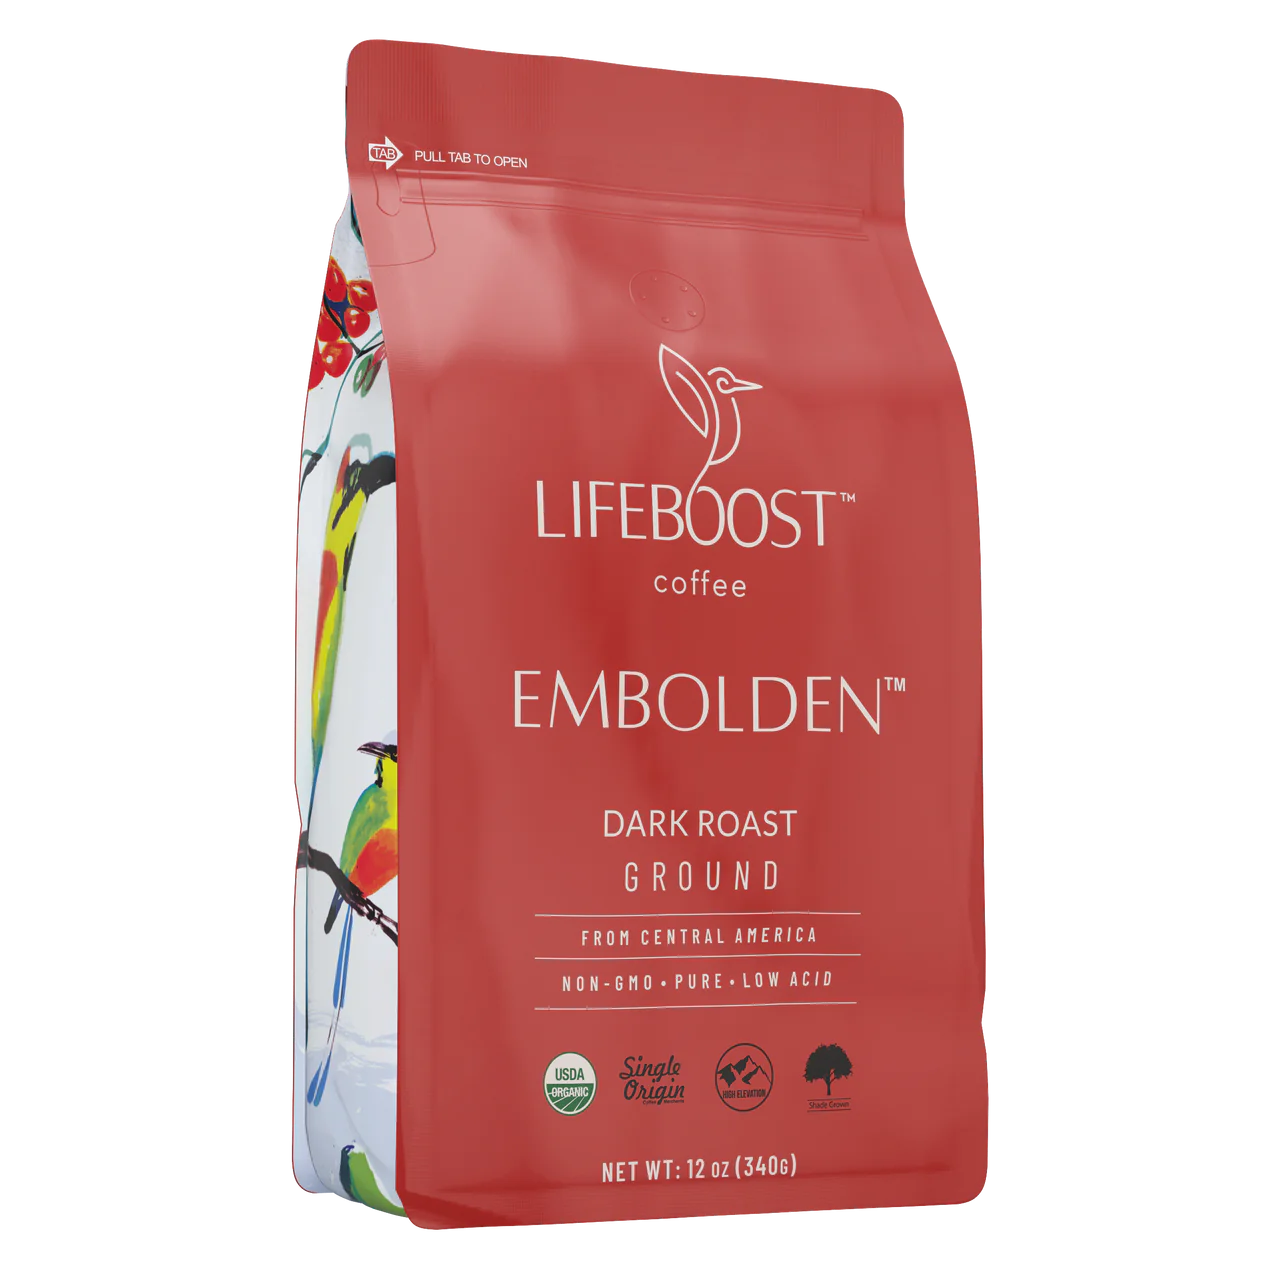 Lifeboost Coffee Embolden Dark Roast_low acid coffee brands